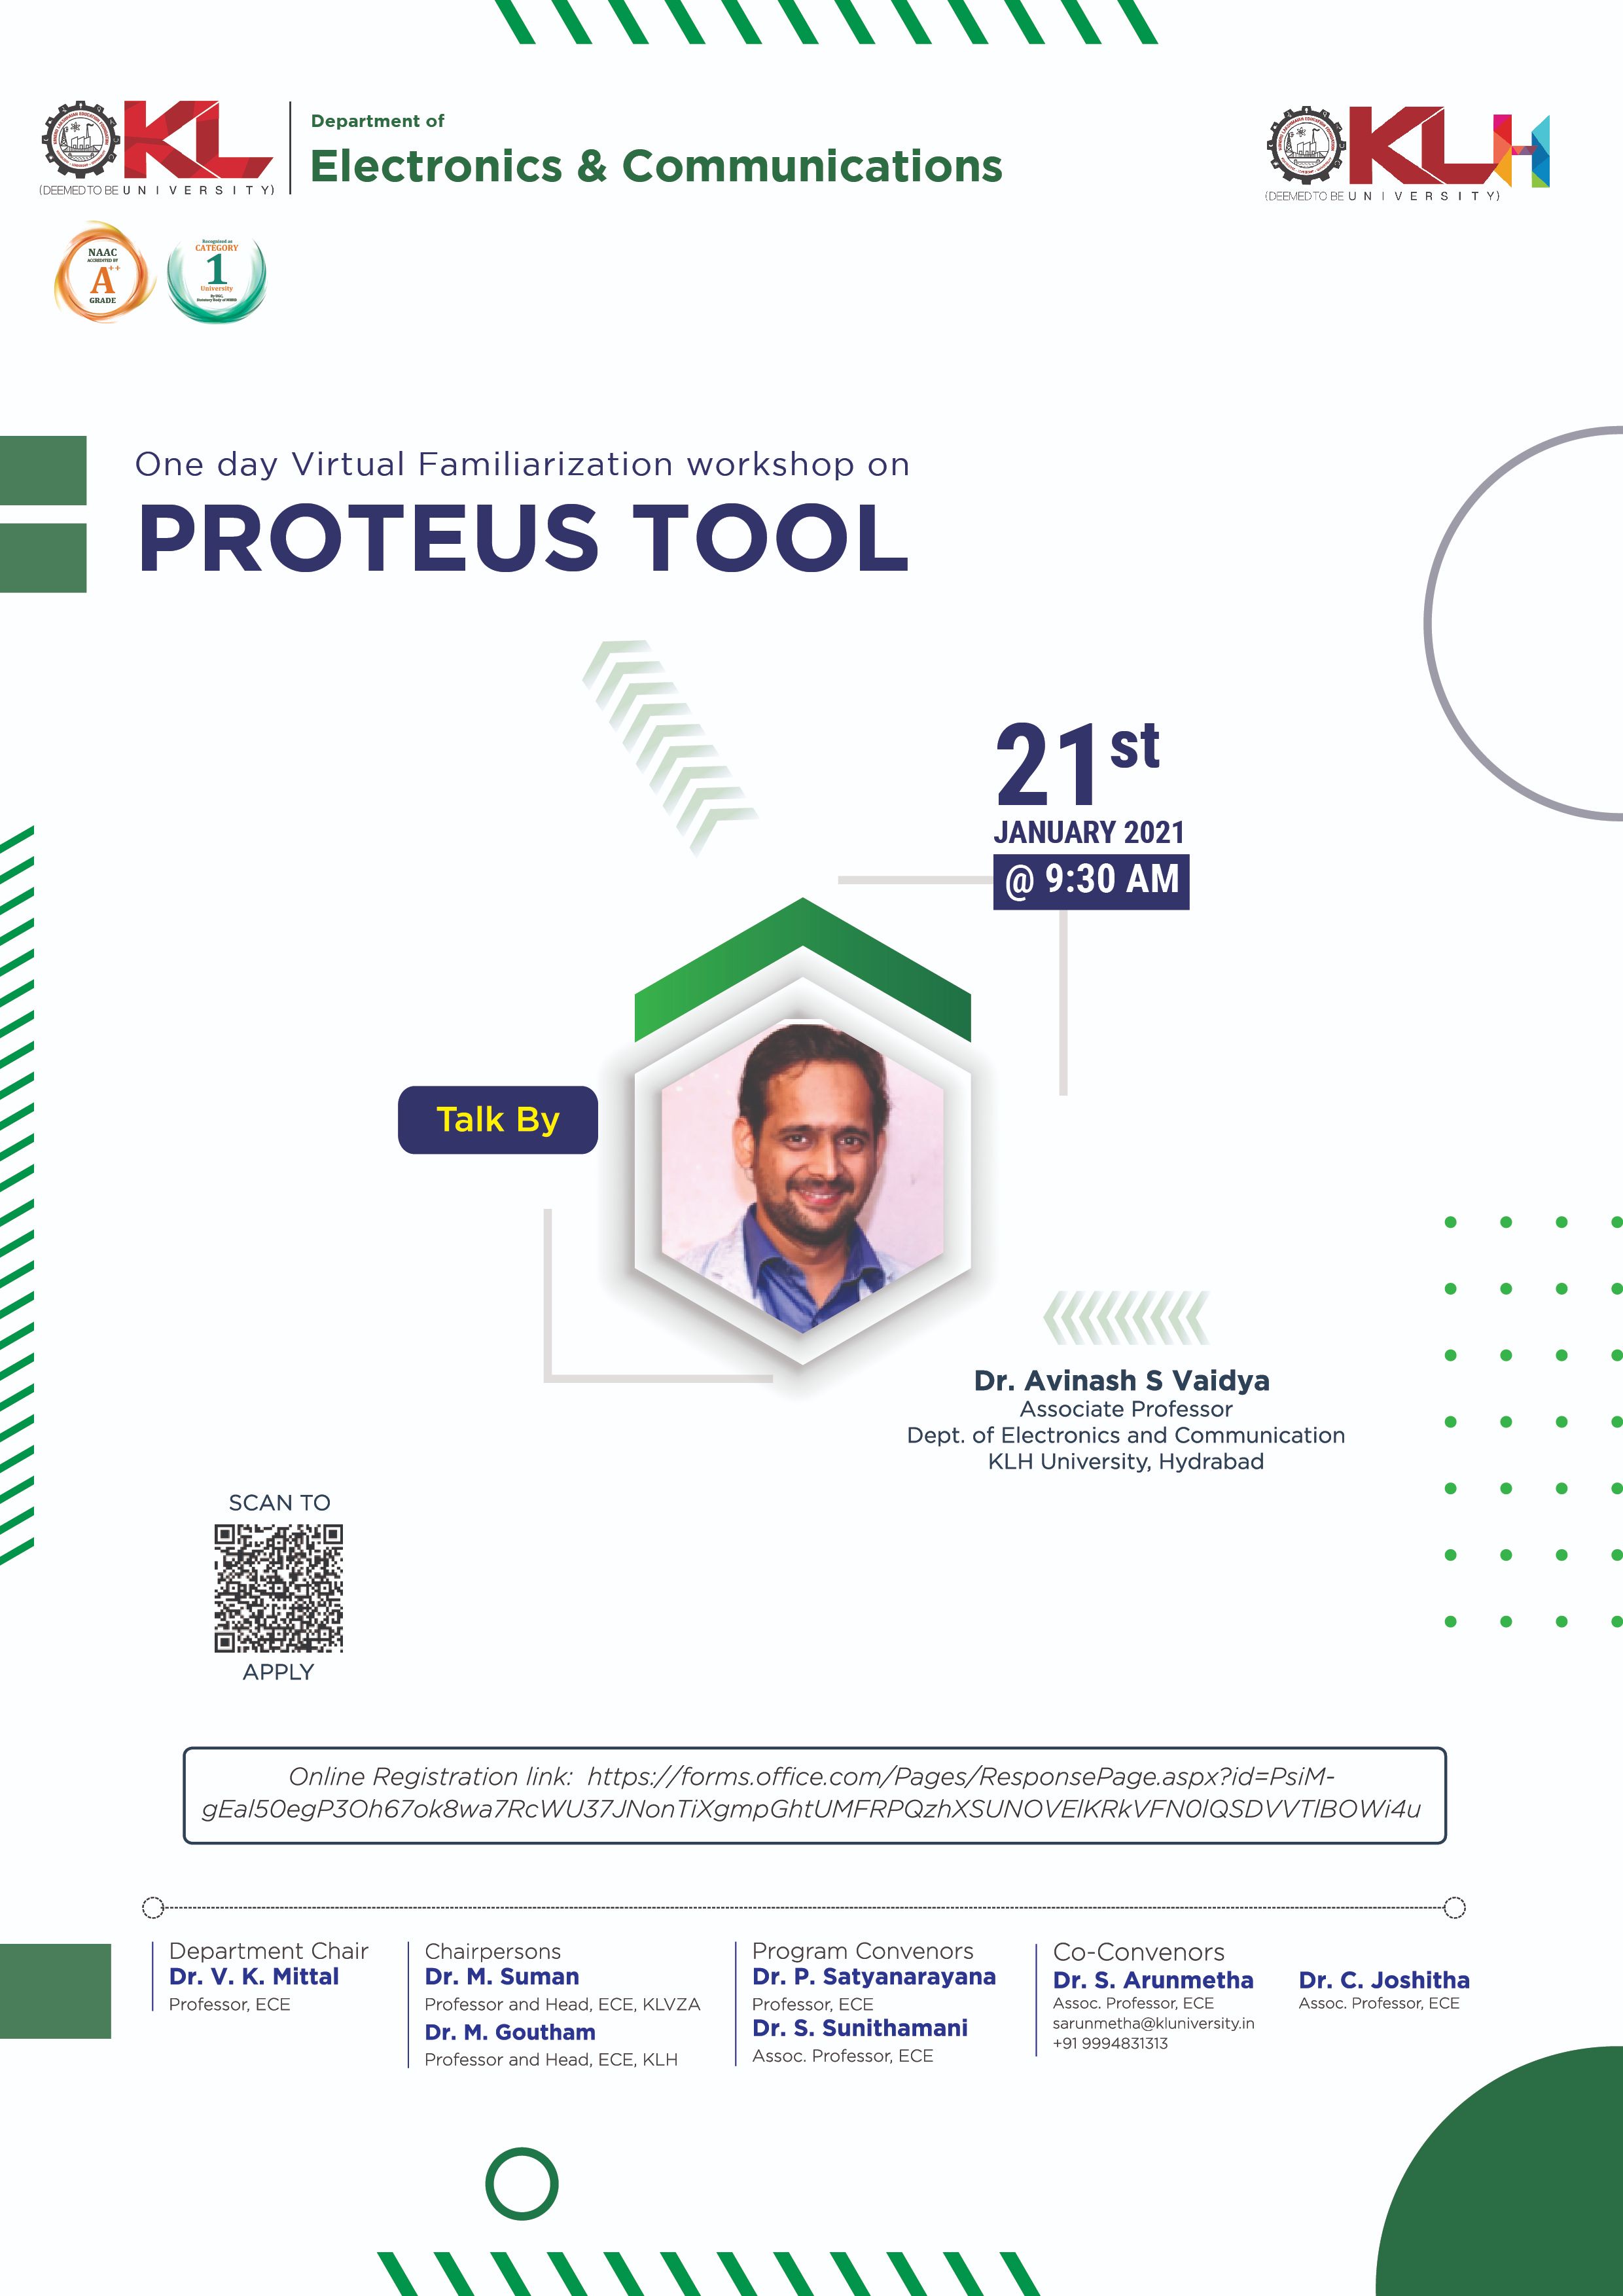 Familiarization on Proteus Tool